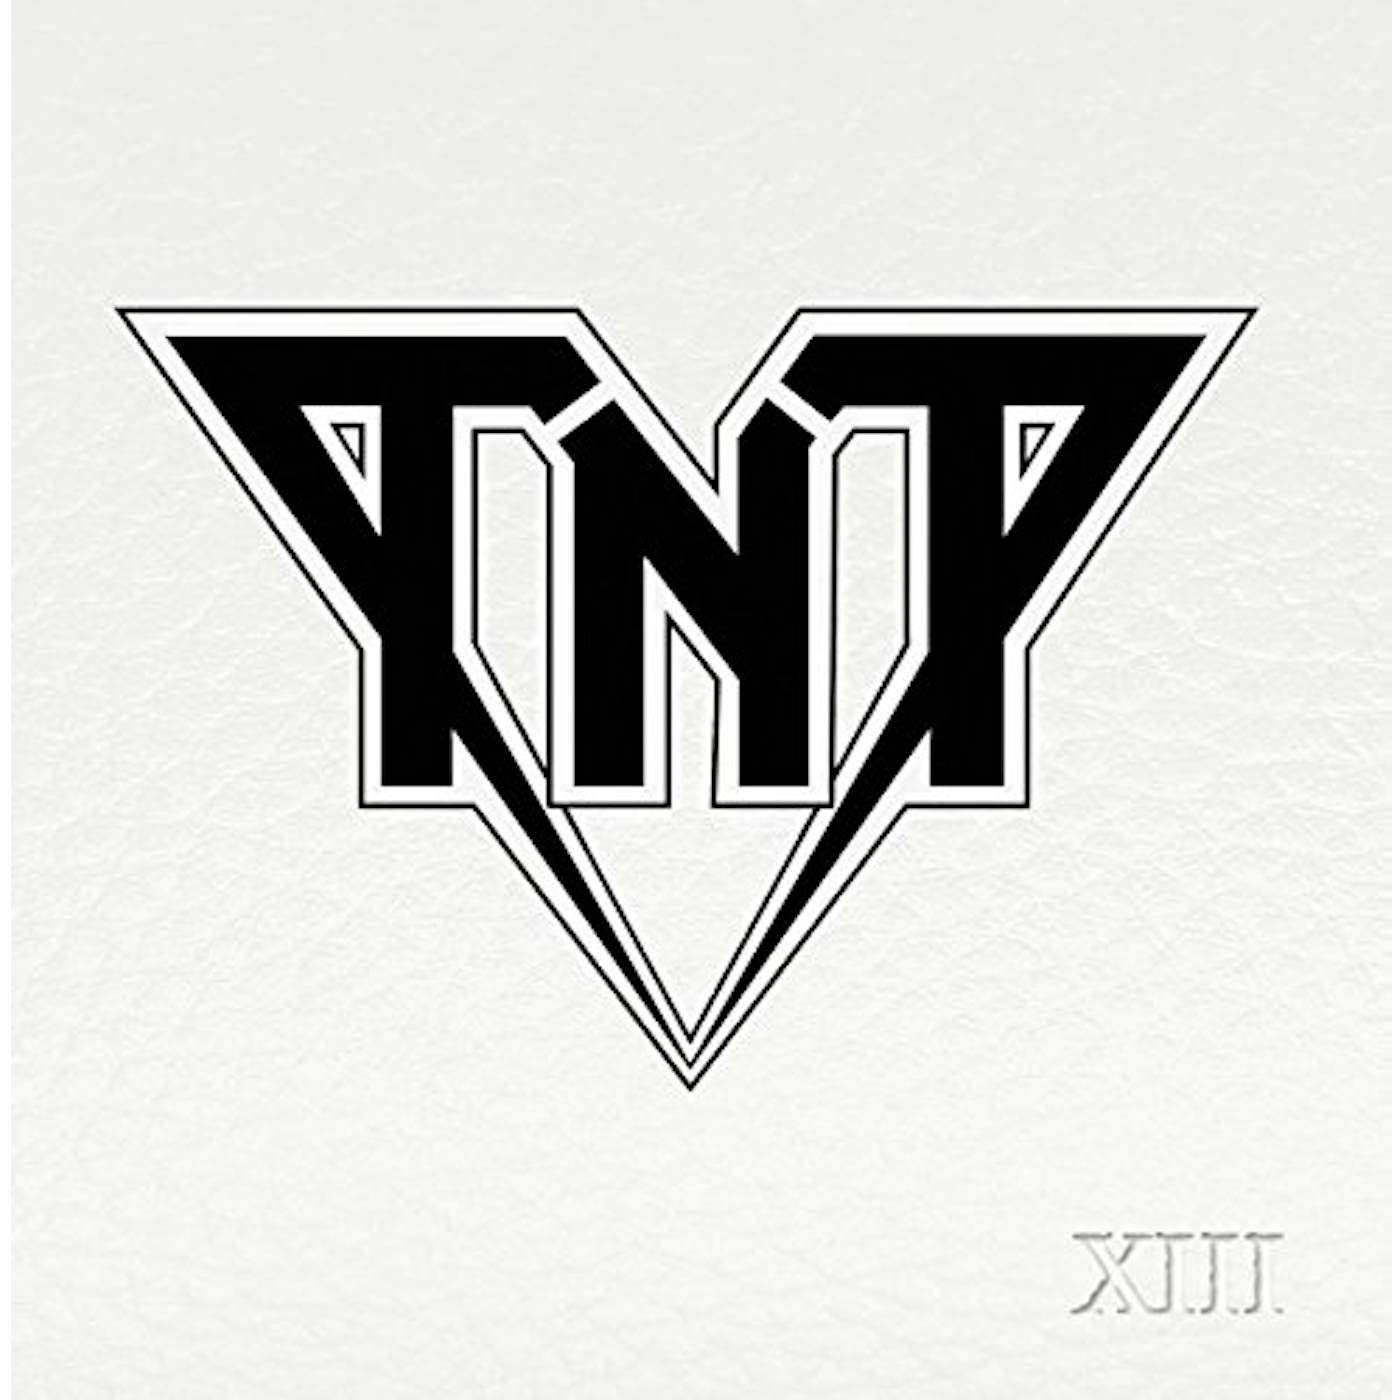 TNT XIII Vinyl Record